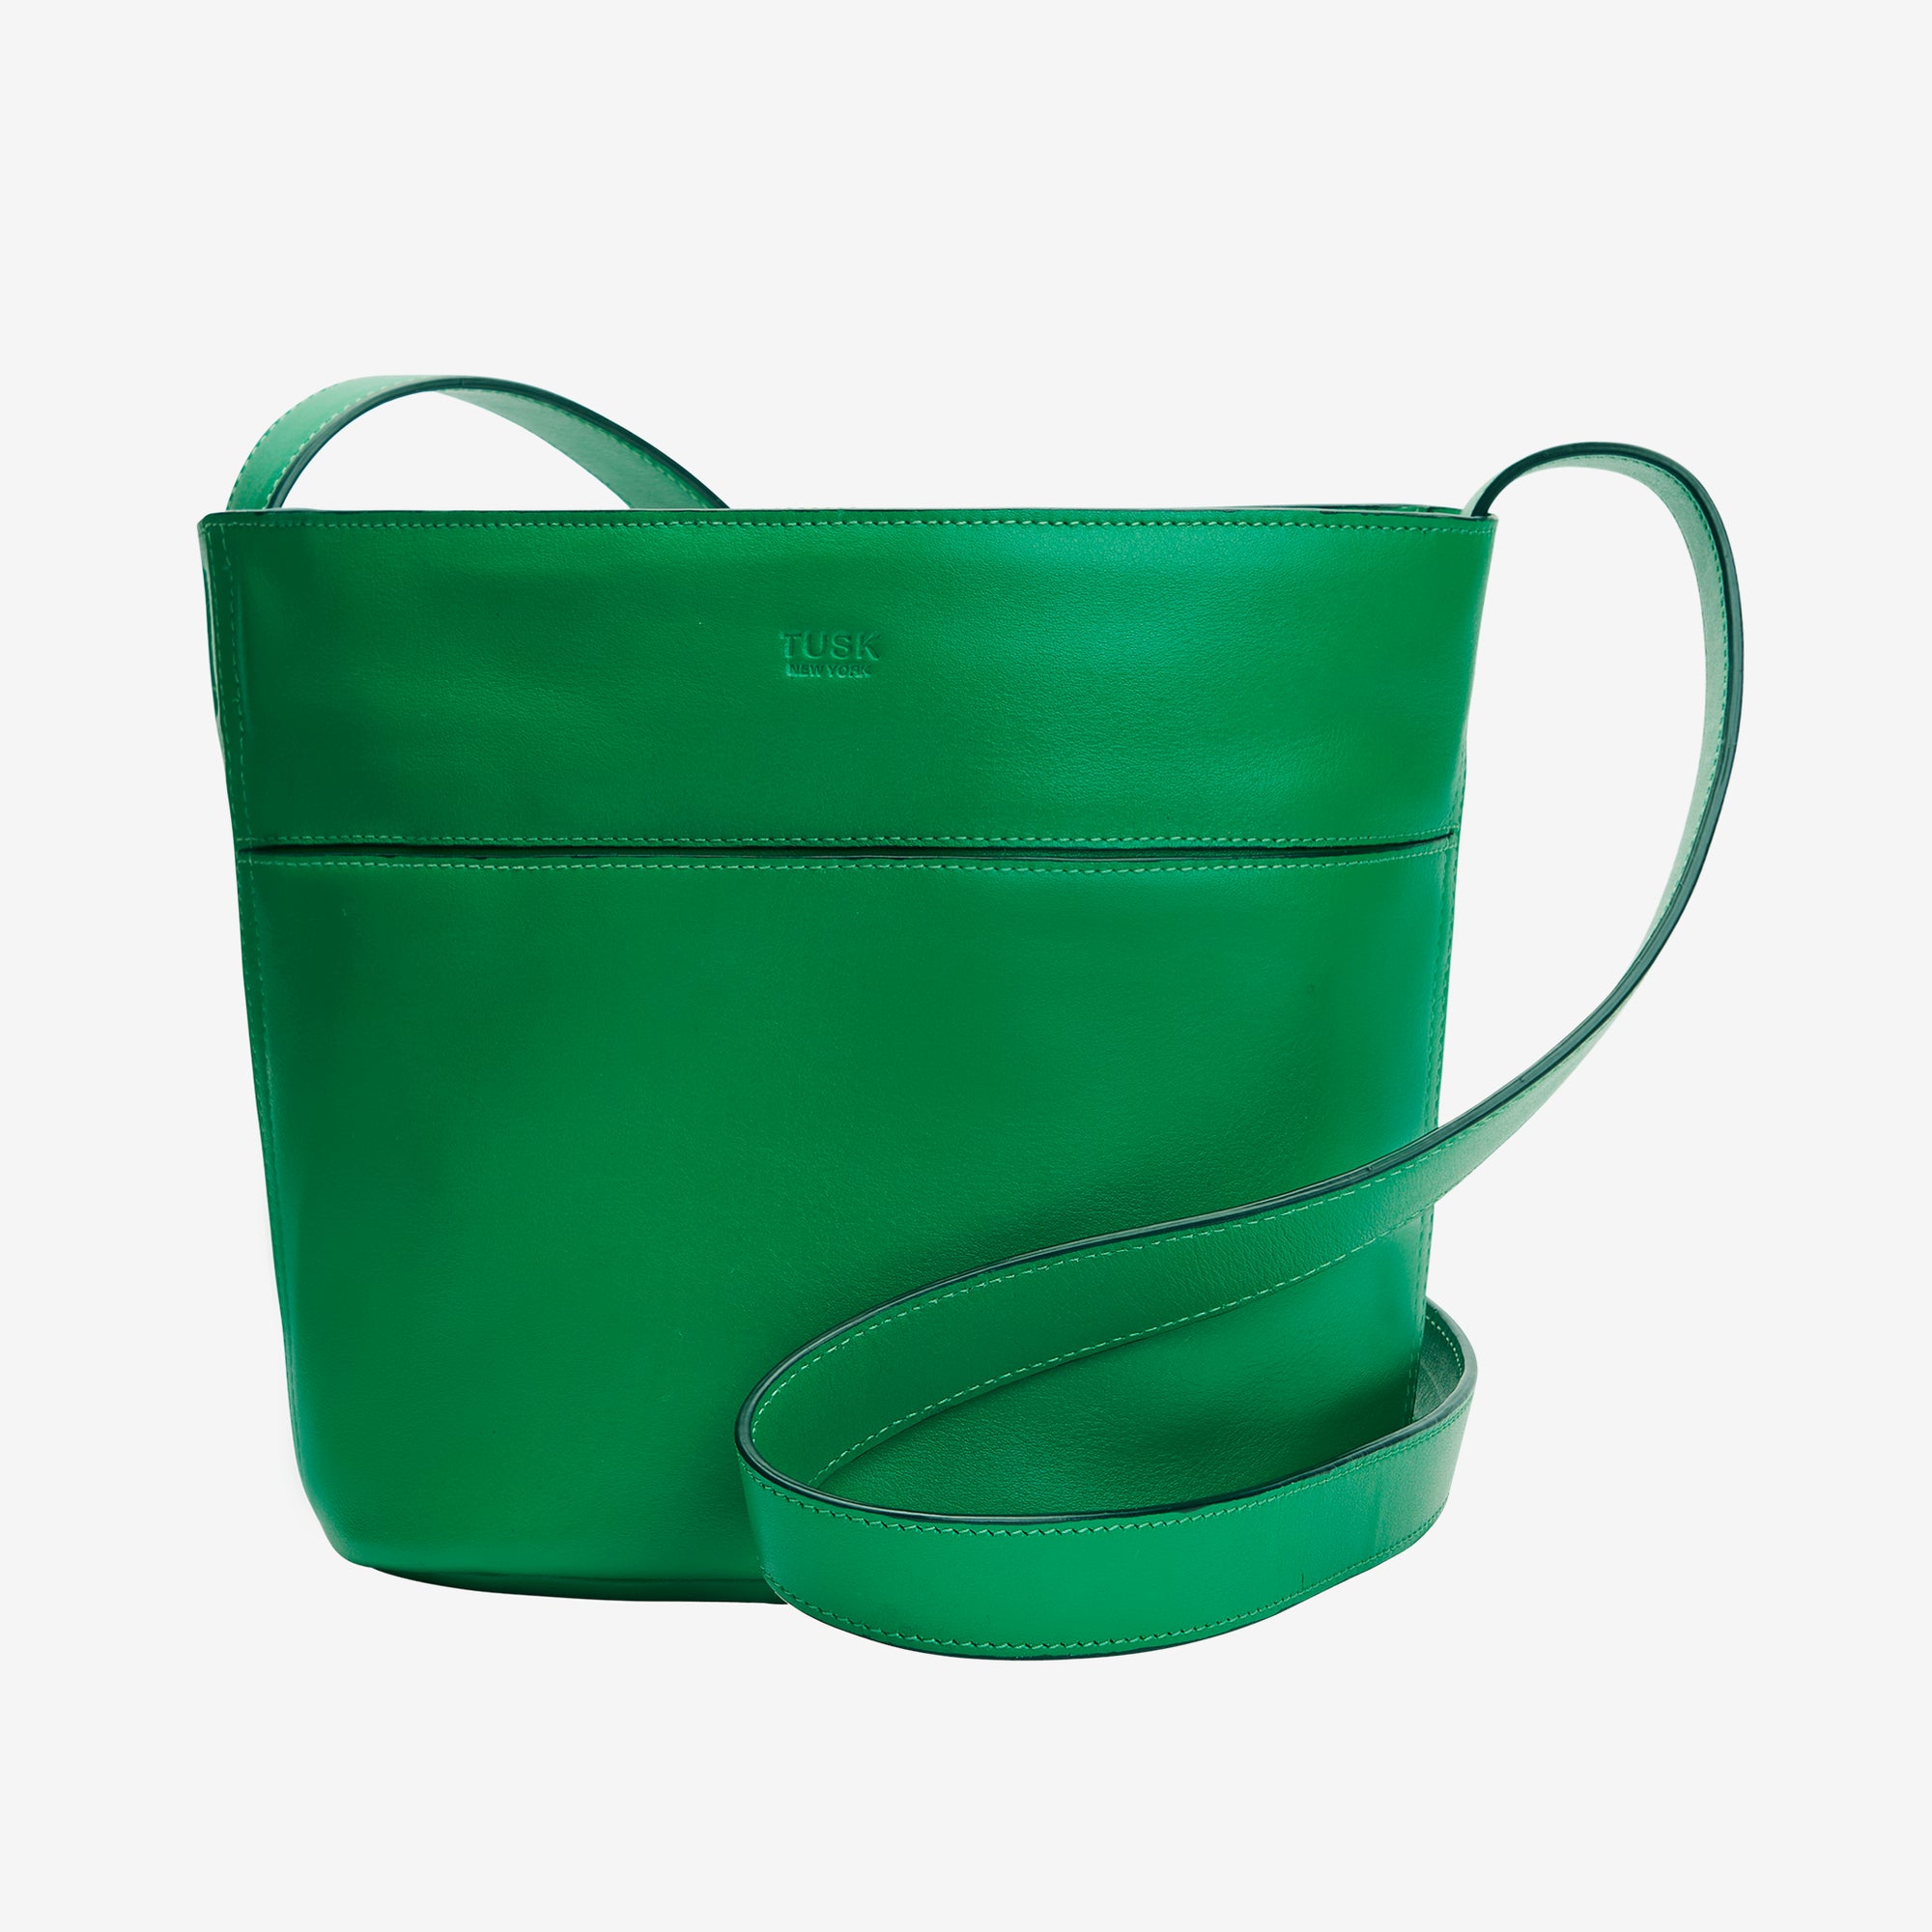    tusk-9925-leather-charu-small-bucket-bag-emerald-front